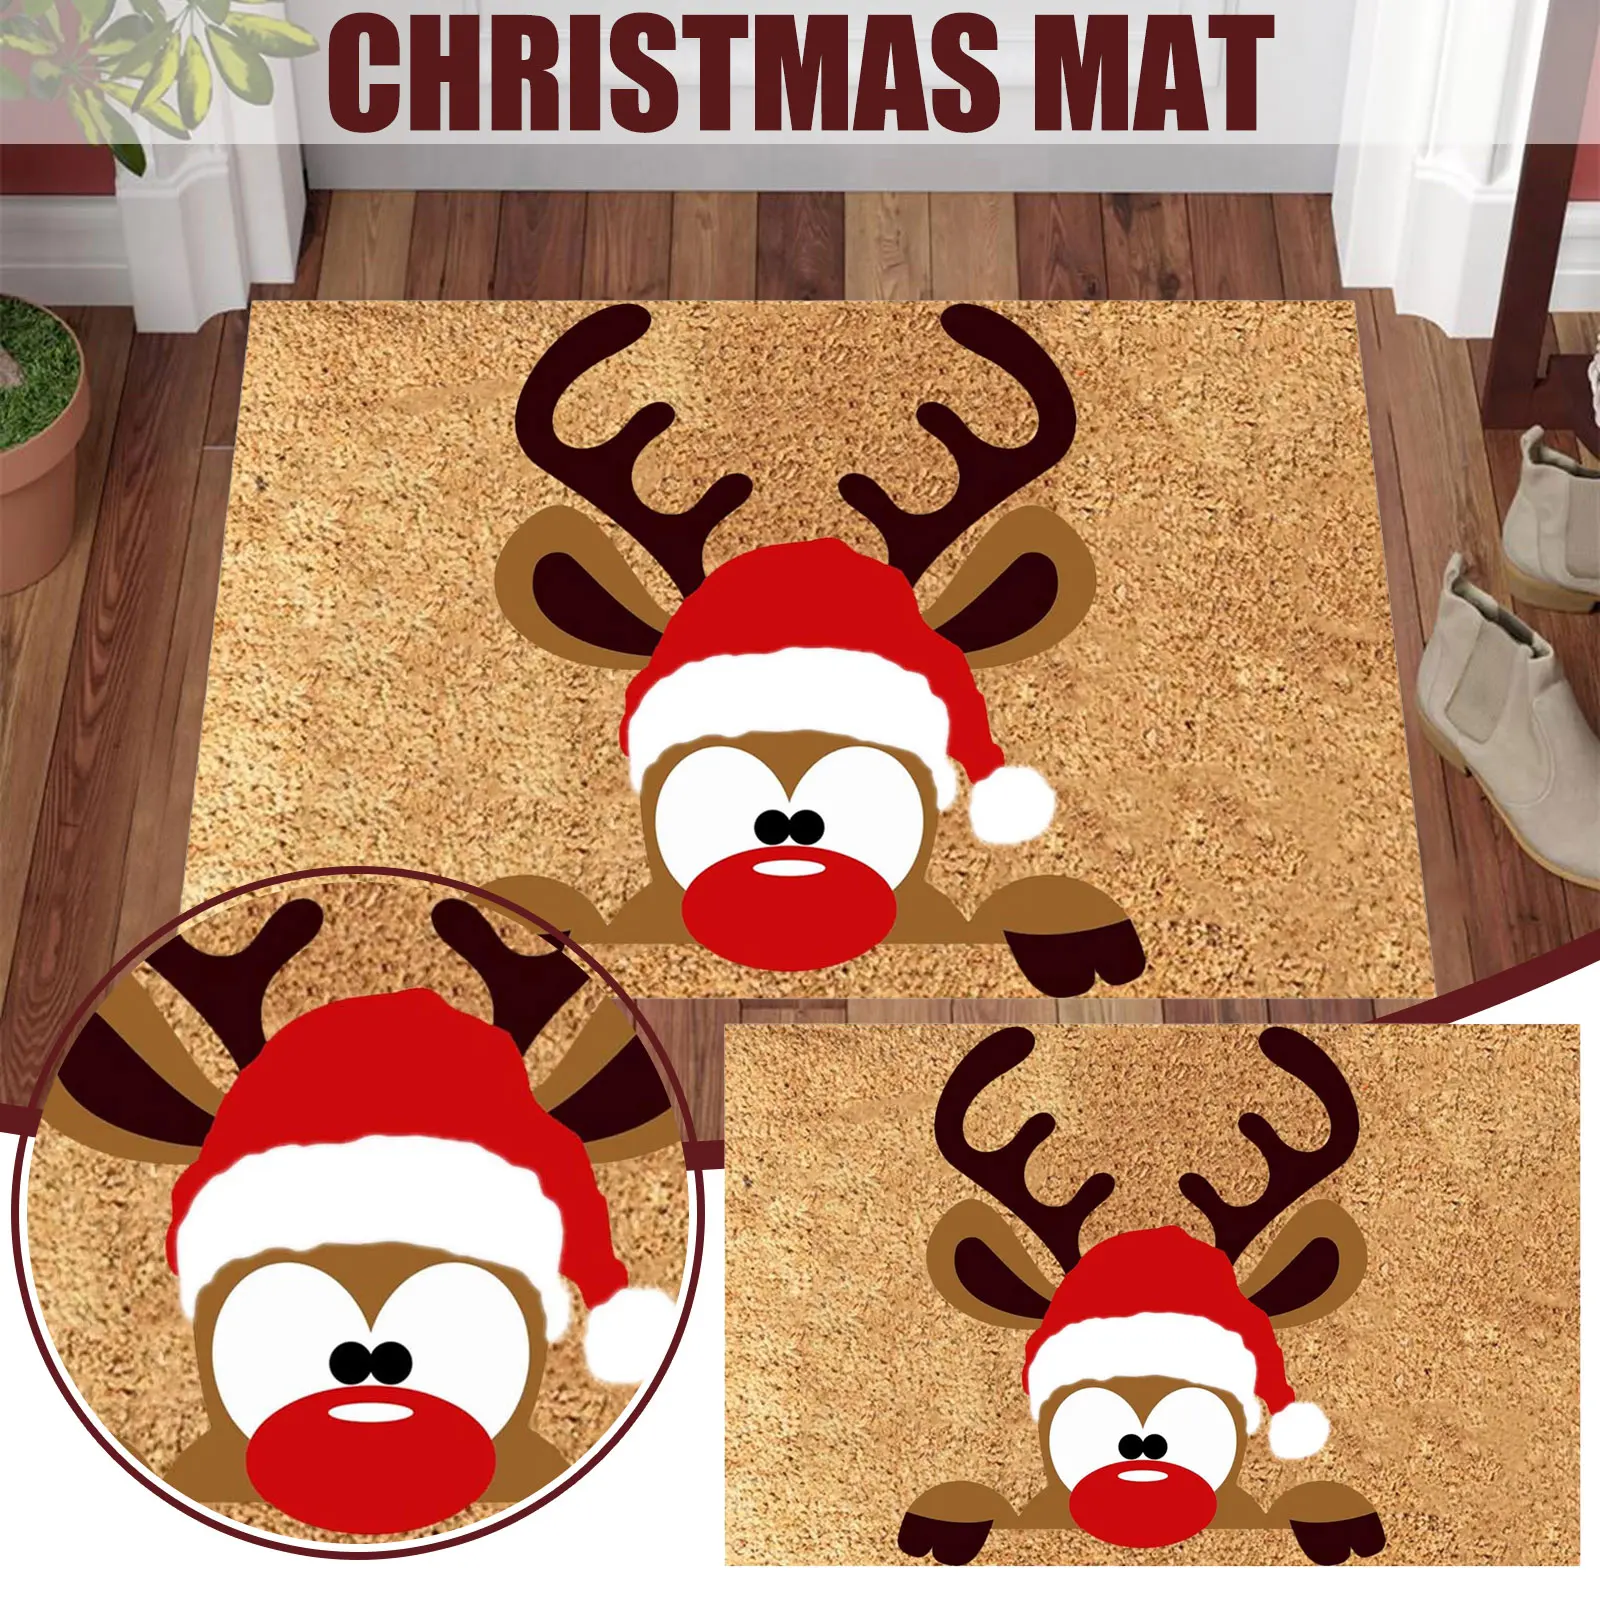 Merry Christmas Theme Doormat Kitchen Mat Xmas Bedroom Entrance Doormat Living Room Carpet Bathroom Non-Slip Entrance Rug 4